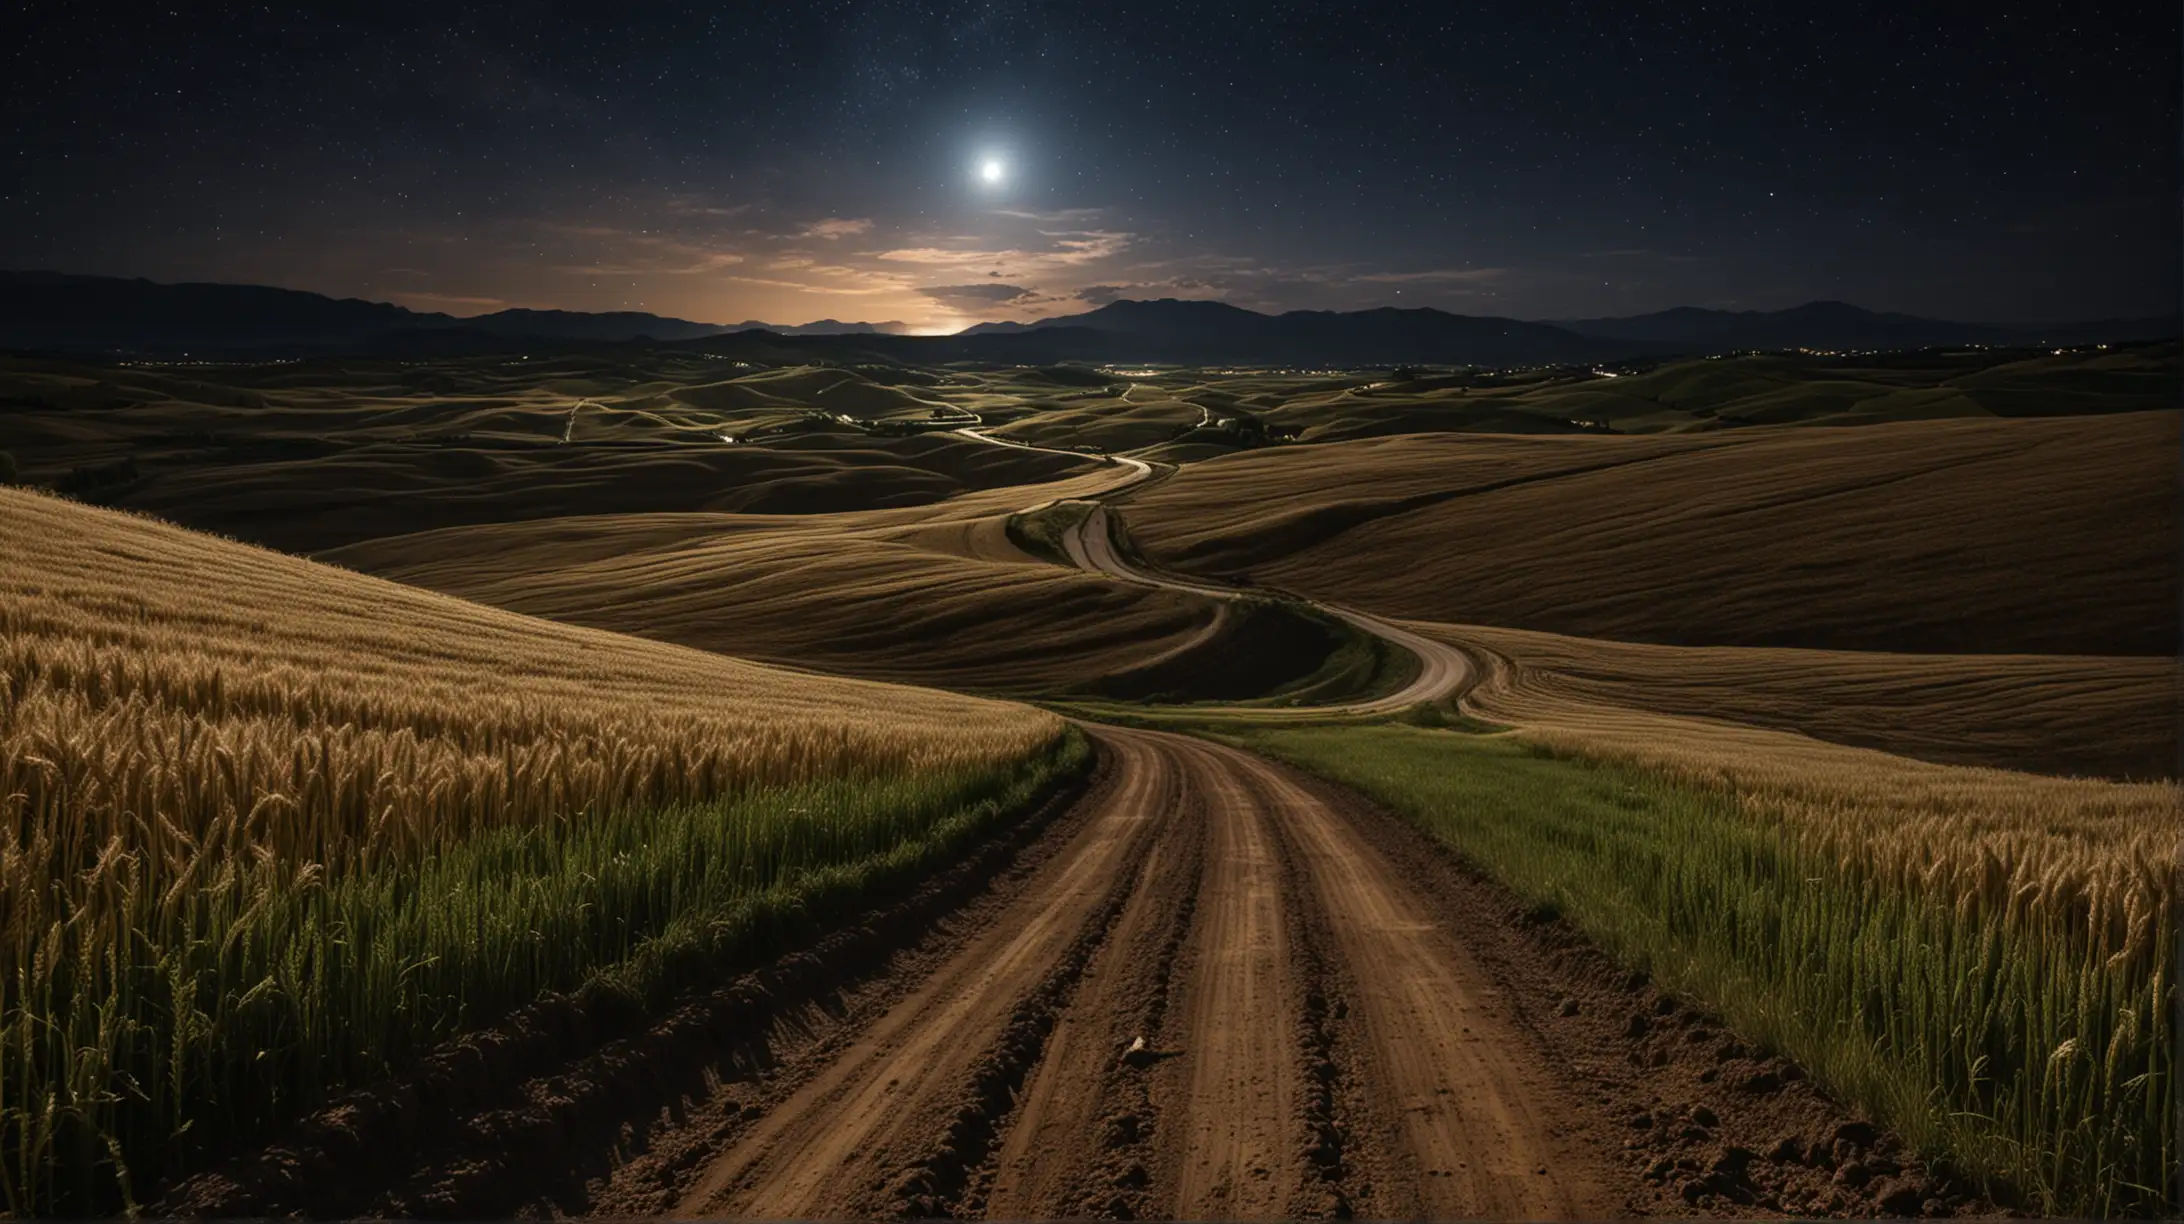 Curving Earth Road through Nighttime Wheat Fields